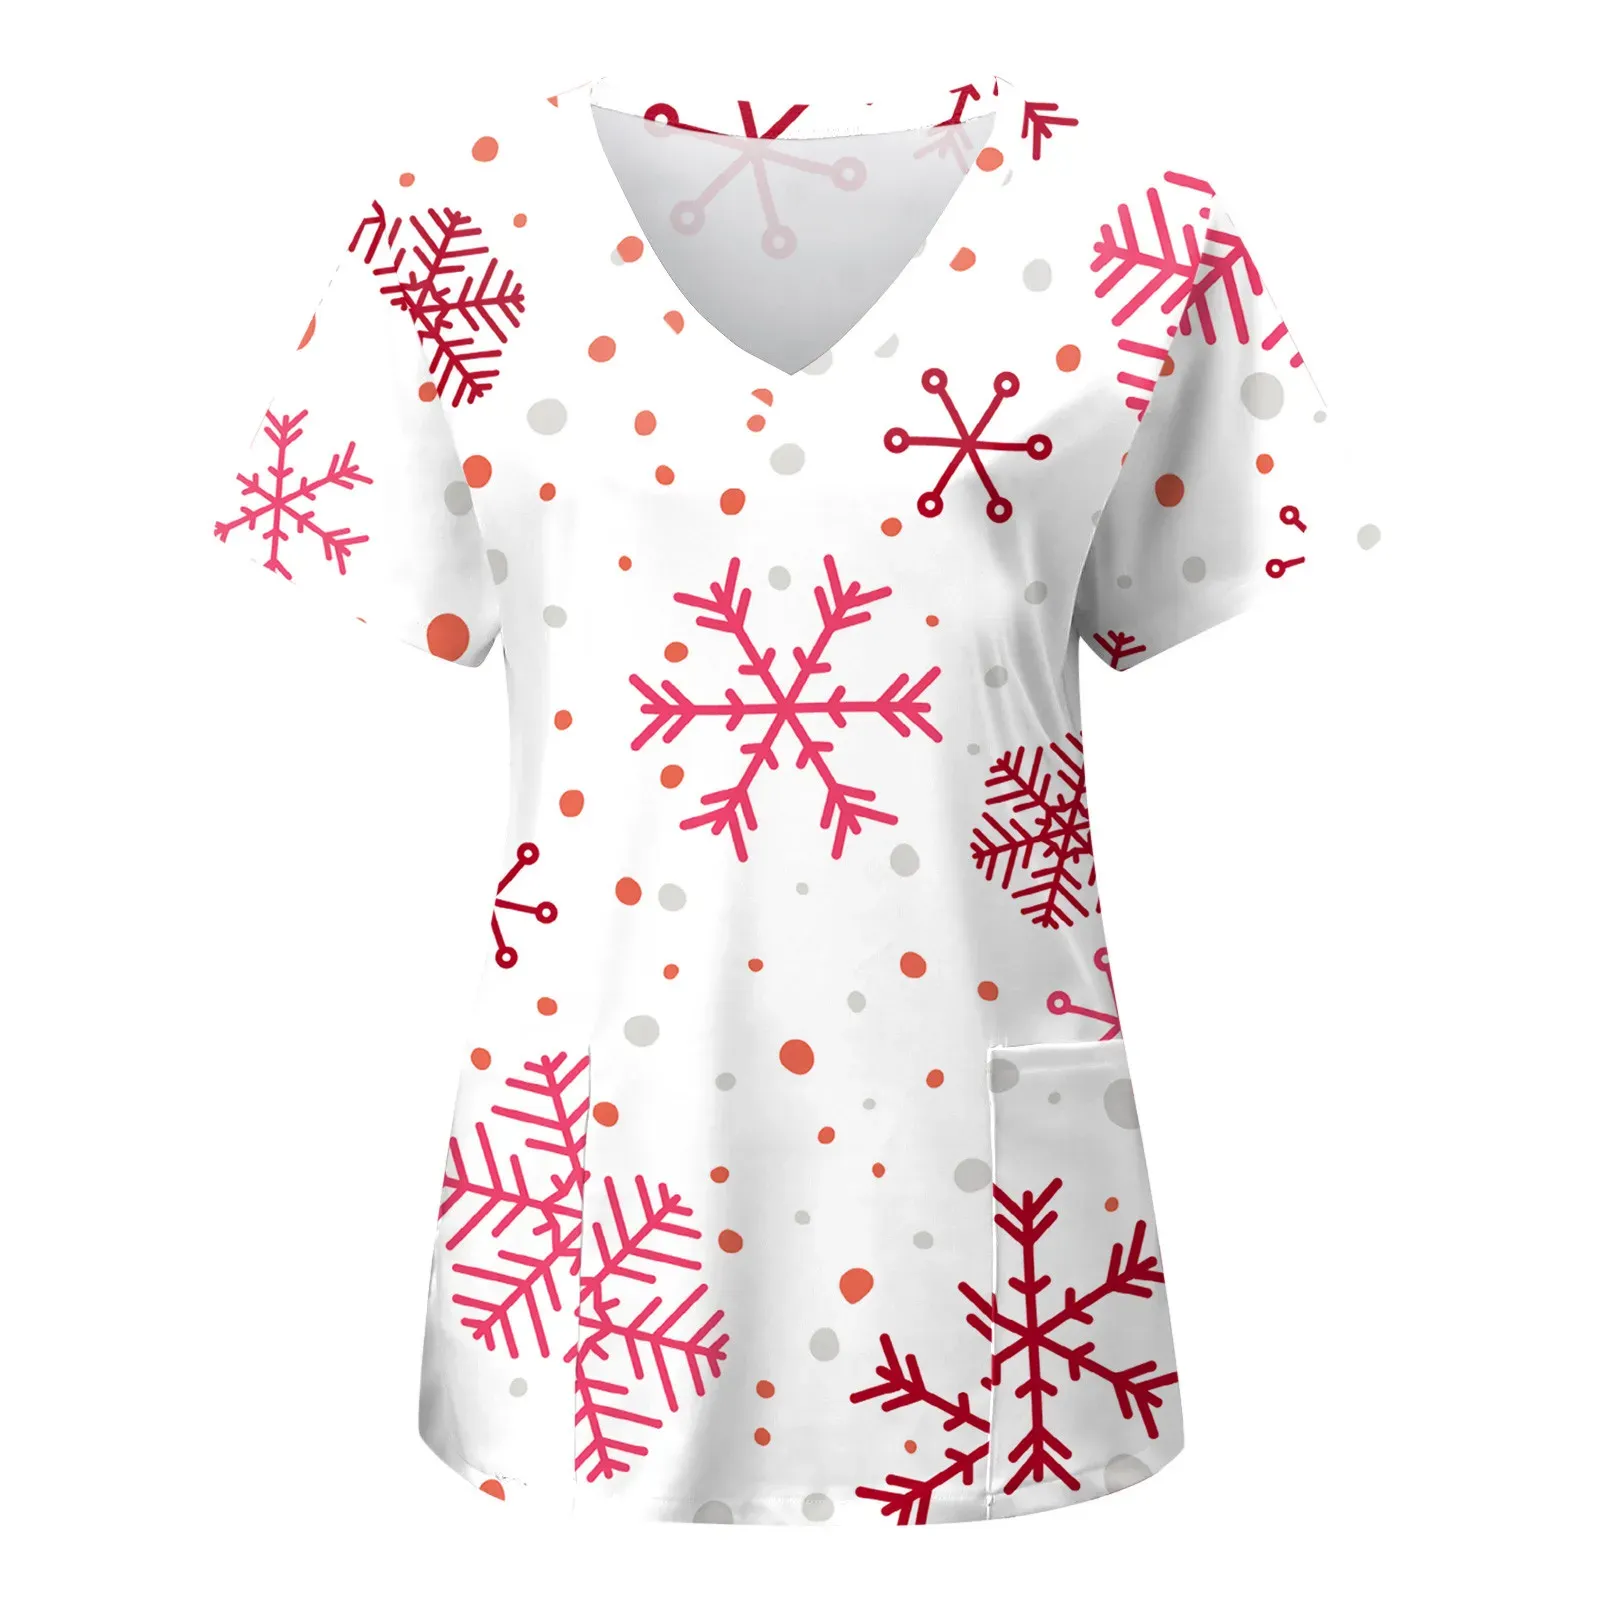 Christmas Nurse Uniform Women Medical Scrubs Santa Claus Elk Print Short Sleeve Pocket Overalls Carer Healthcare Working Uniform